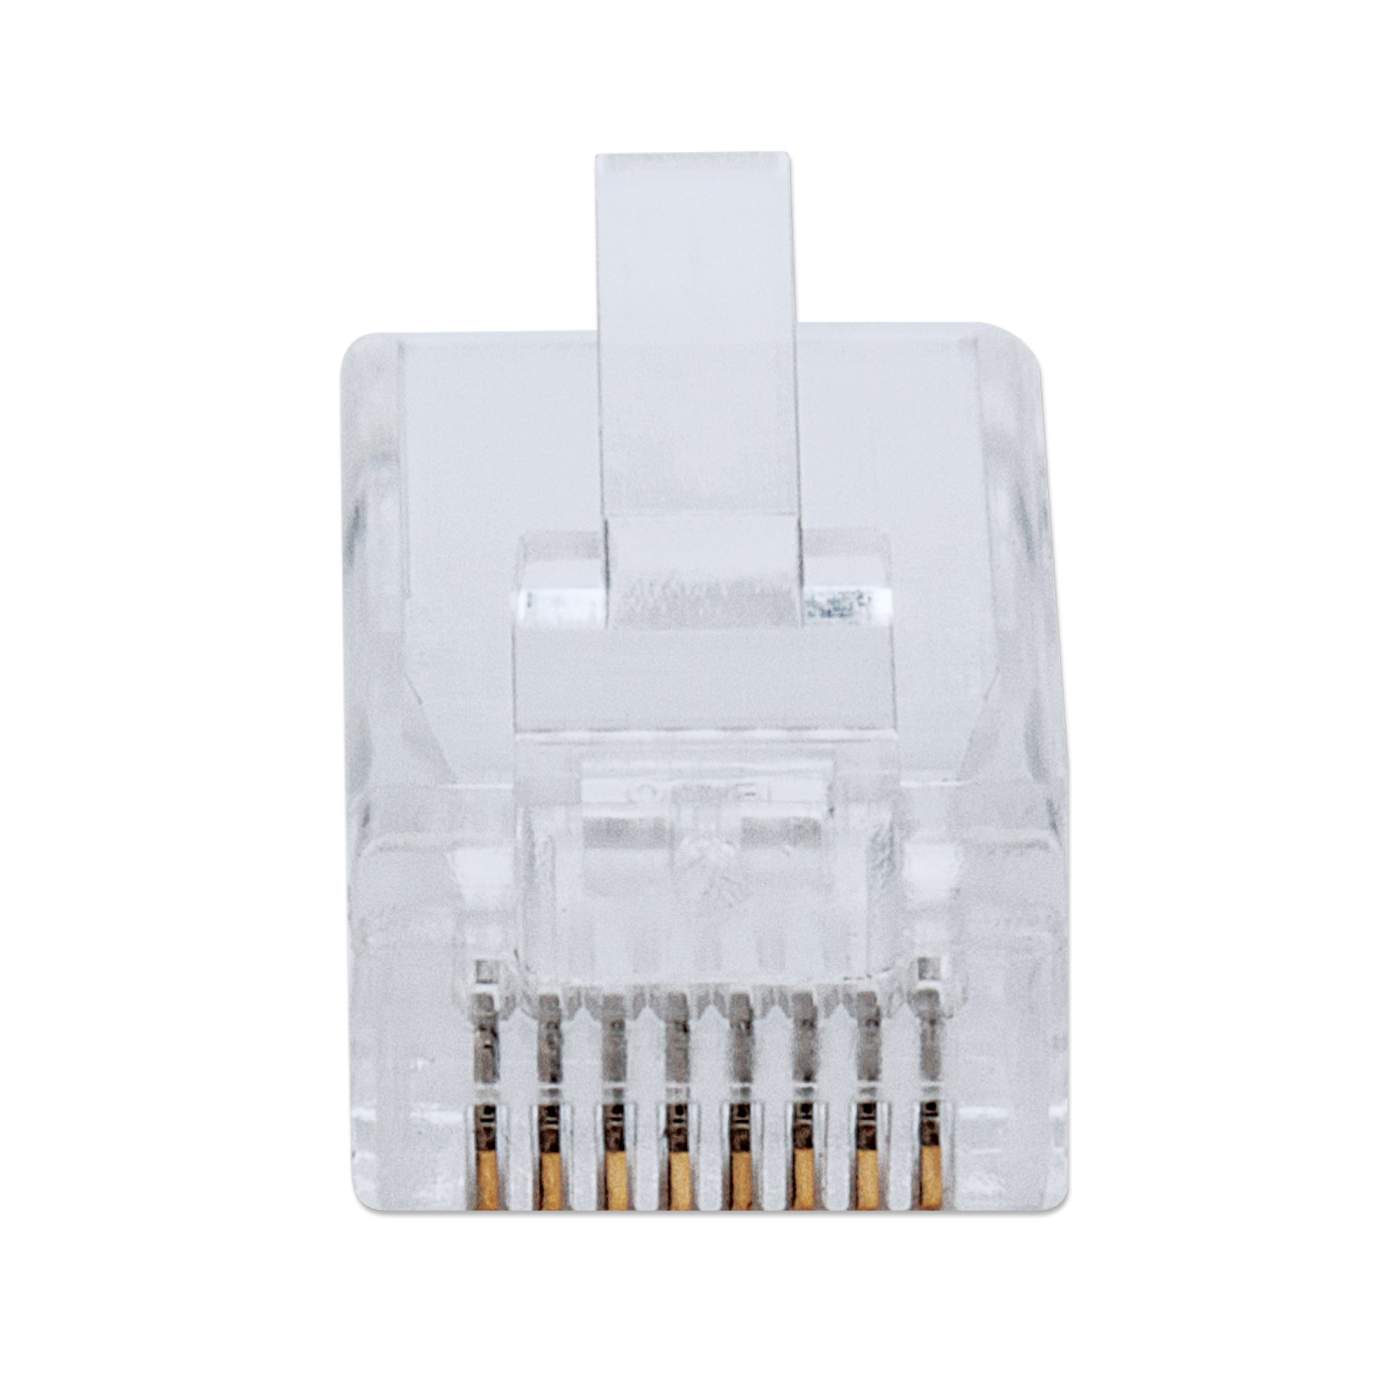 Intellinet Cat6 Bulk Cable, Solid, 23 AWG, SOHO (704663) – Intellinet Europe